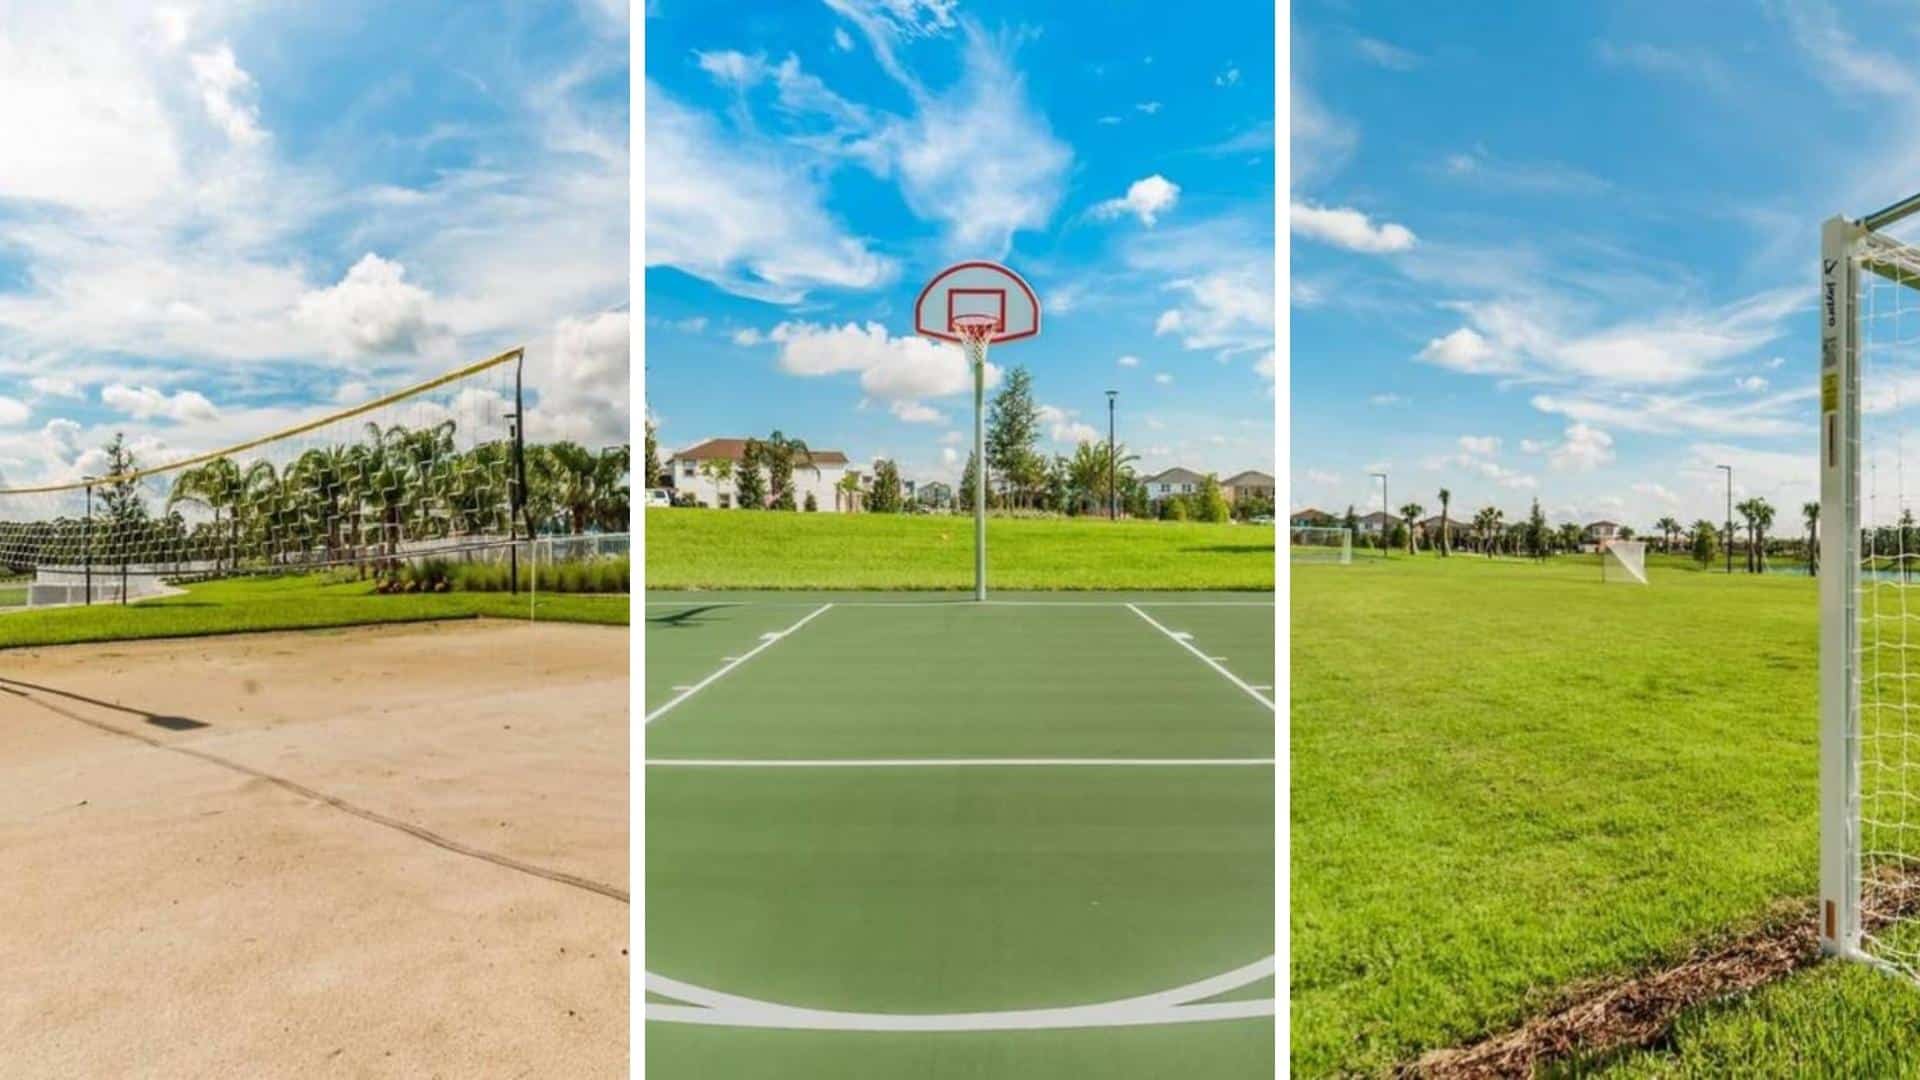 Solara Resort Sport Courts - Volleyball - Basketball - Soccer Fields